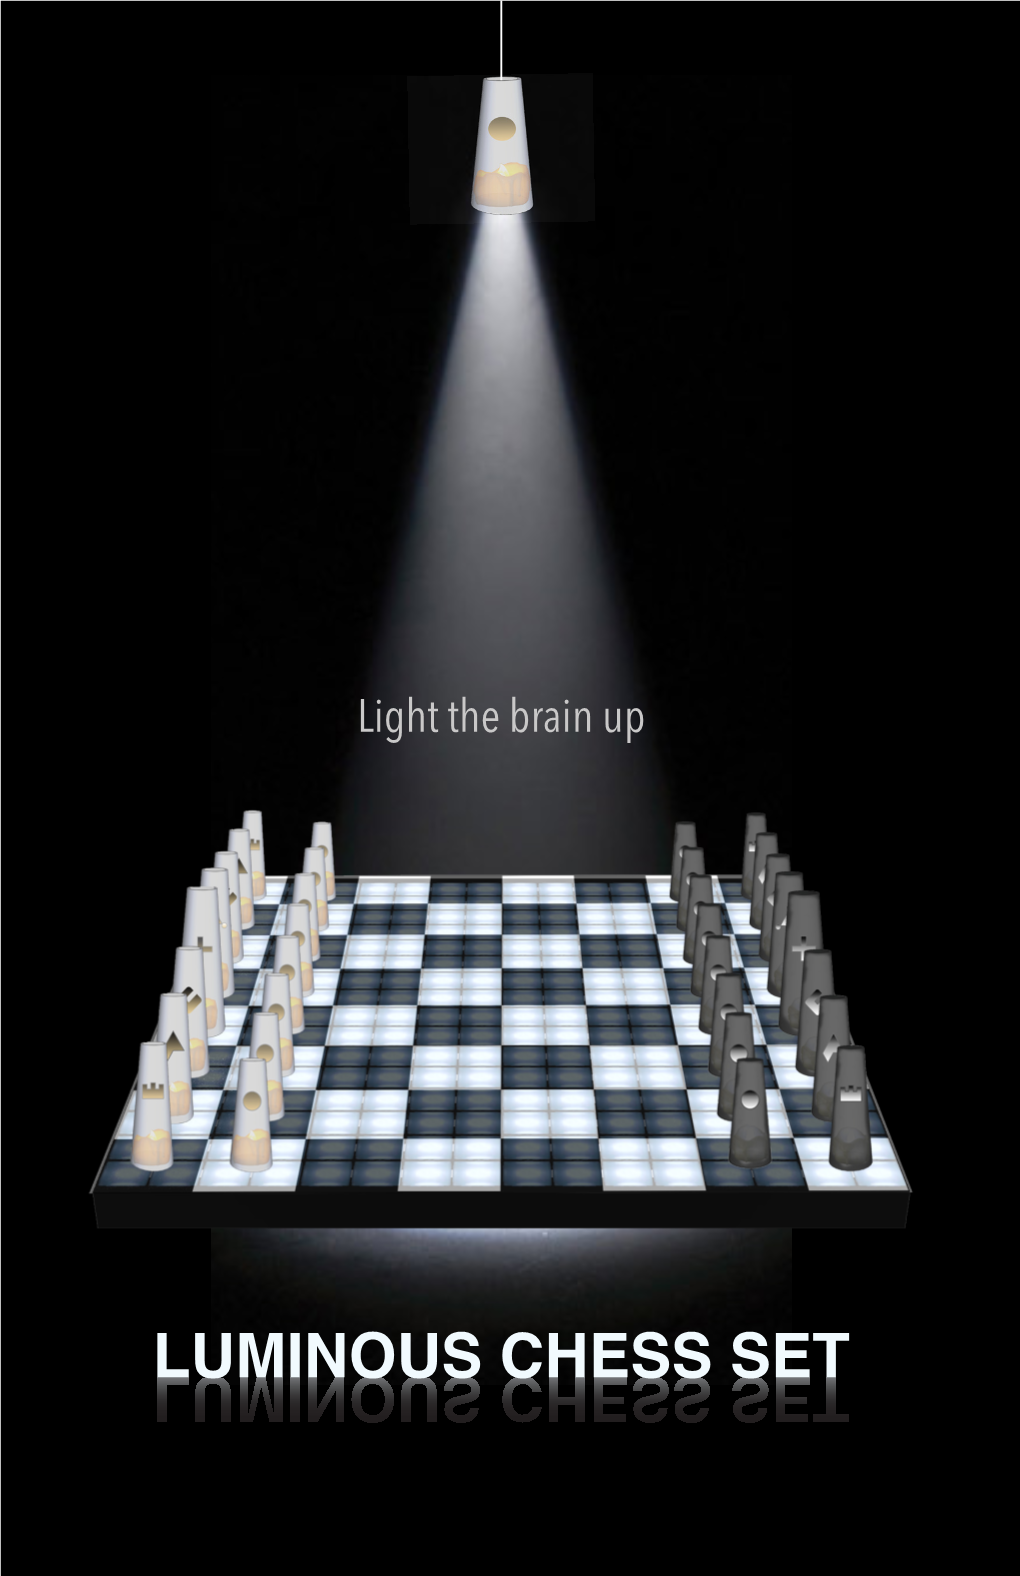 Luminous Chess Set Structure of the Chess Set